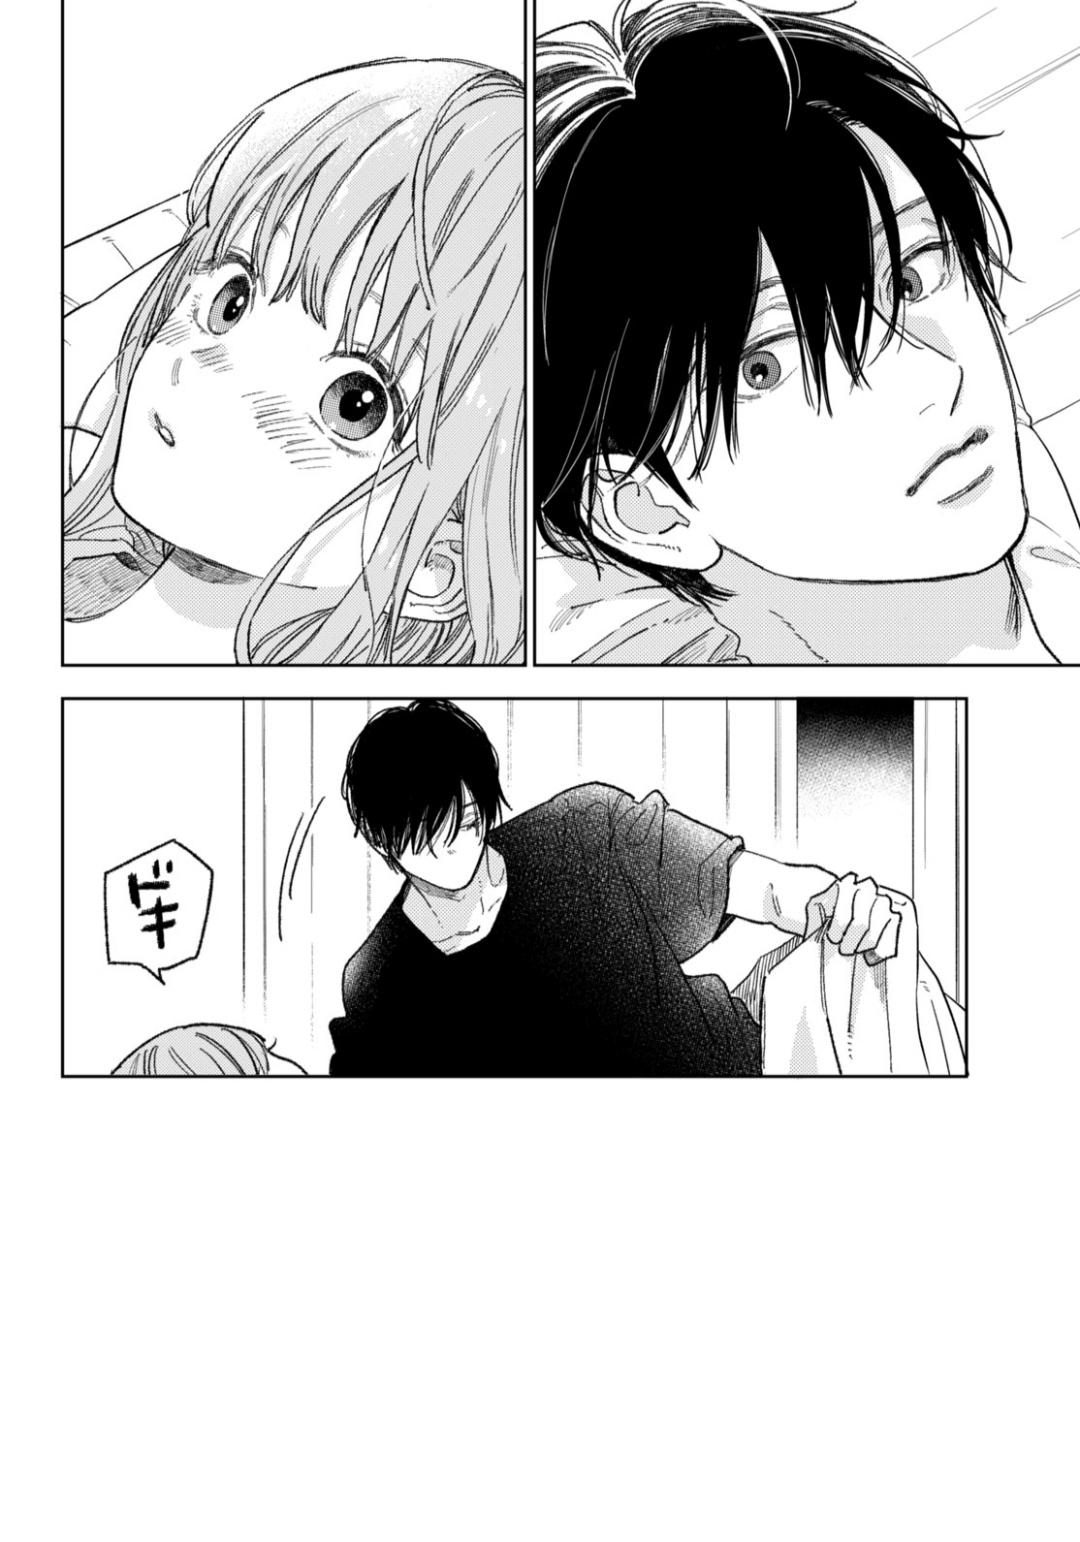 Yubisaki to Renren A Sign Of Affection Image by Morishita Suu 3372583   Zerochan Anime Image Board